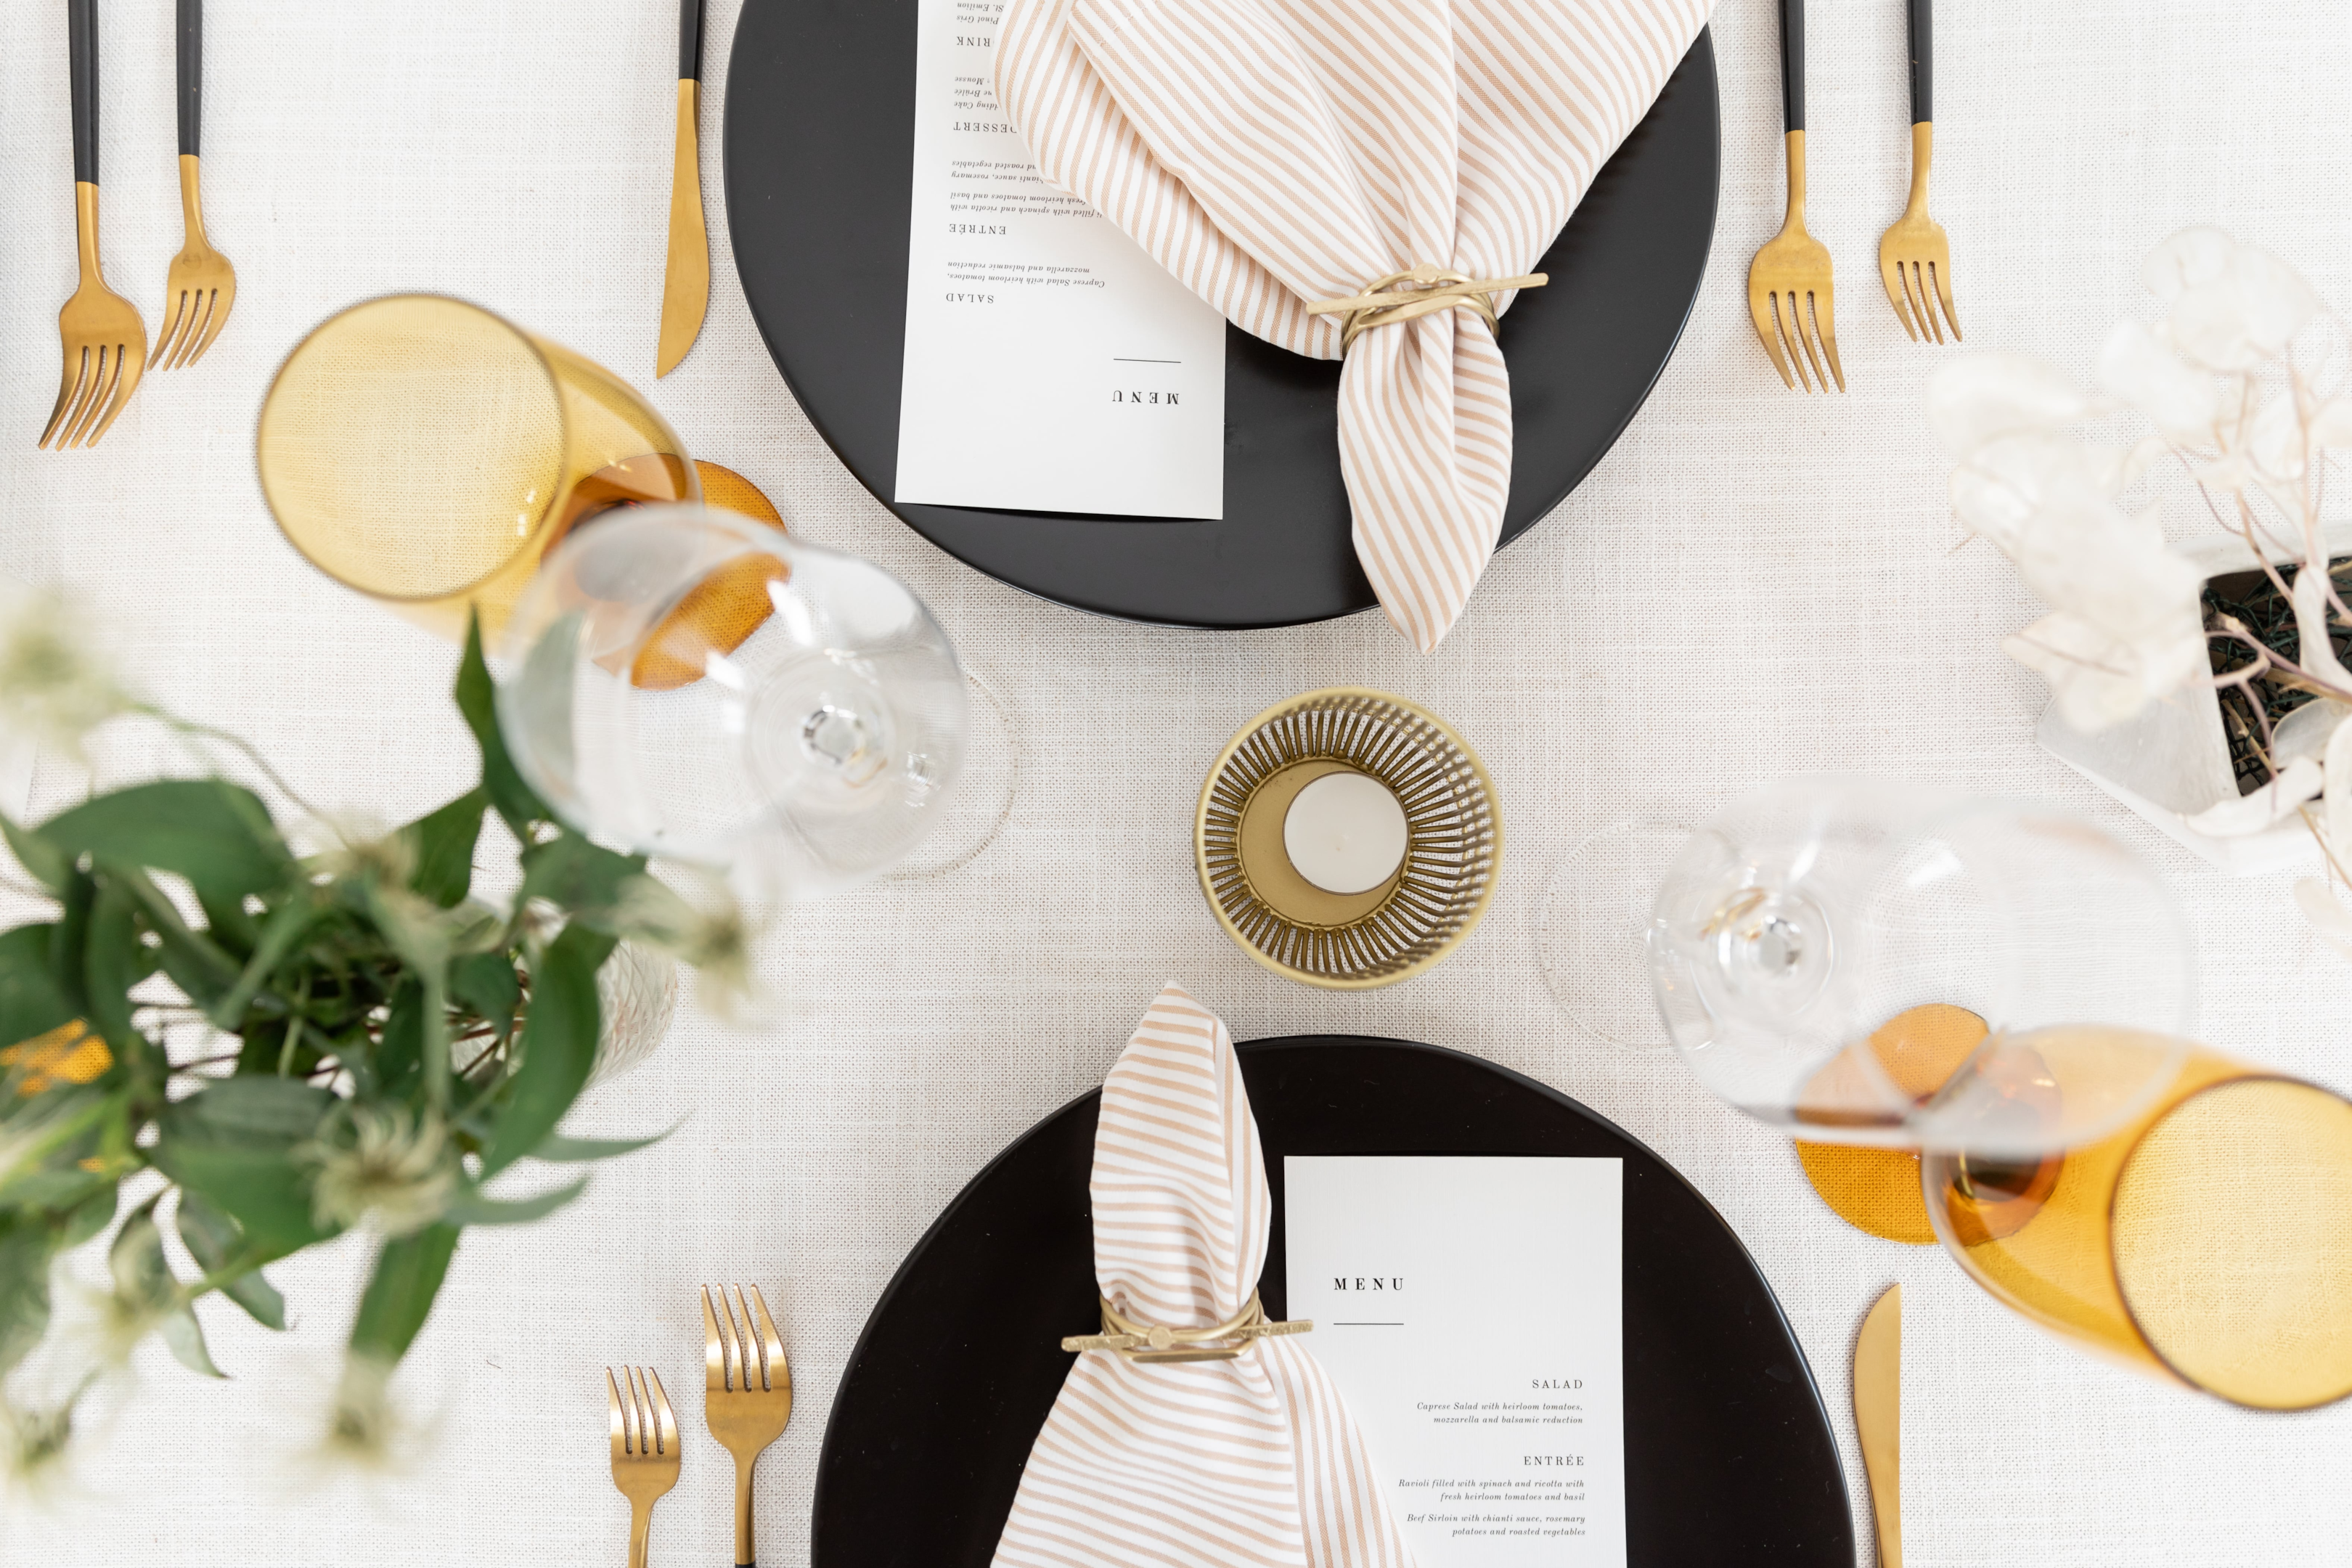 Elegant linen napkins on a beautifully set dining table